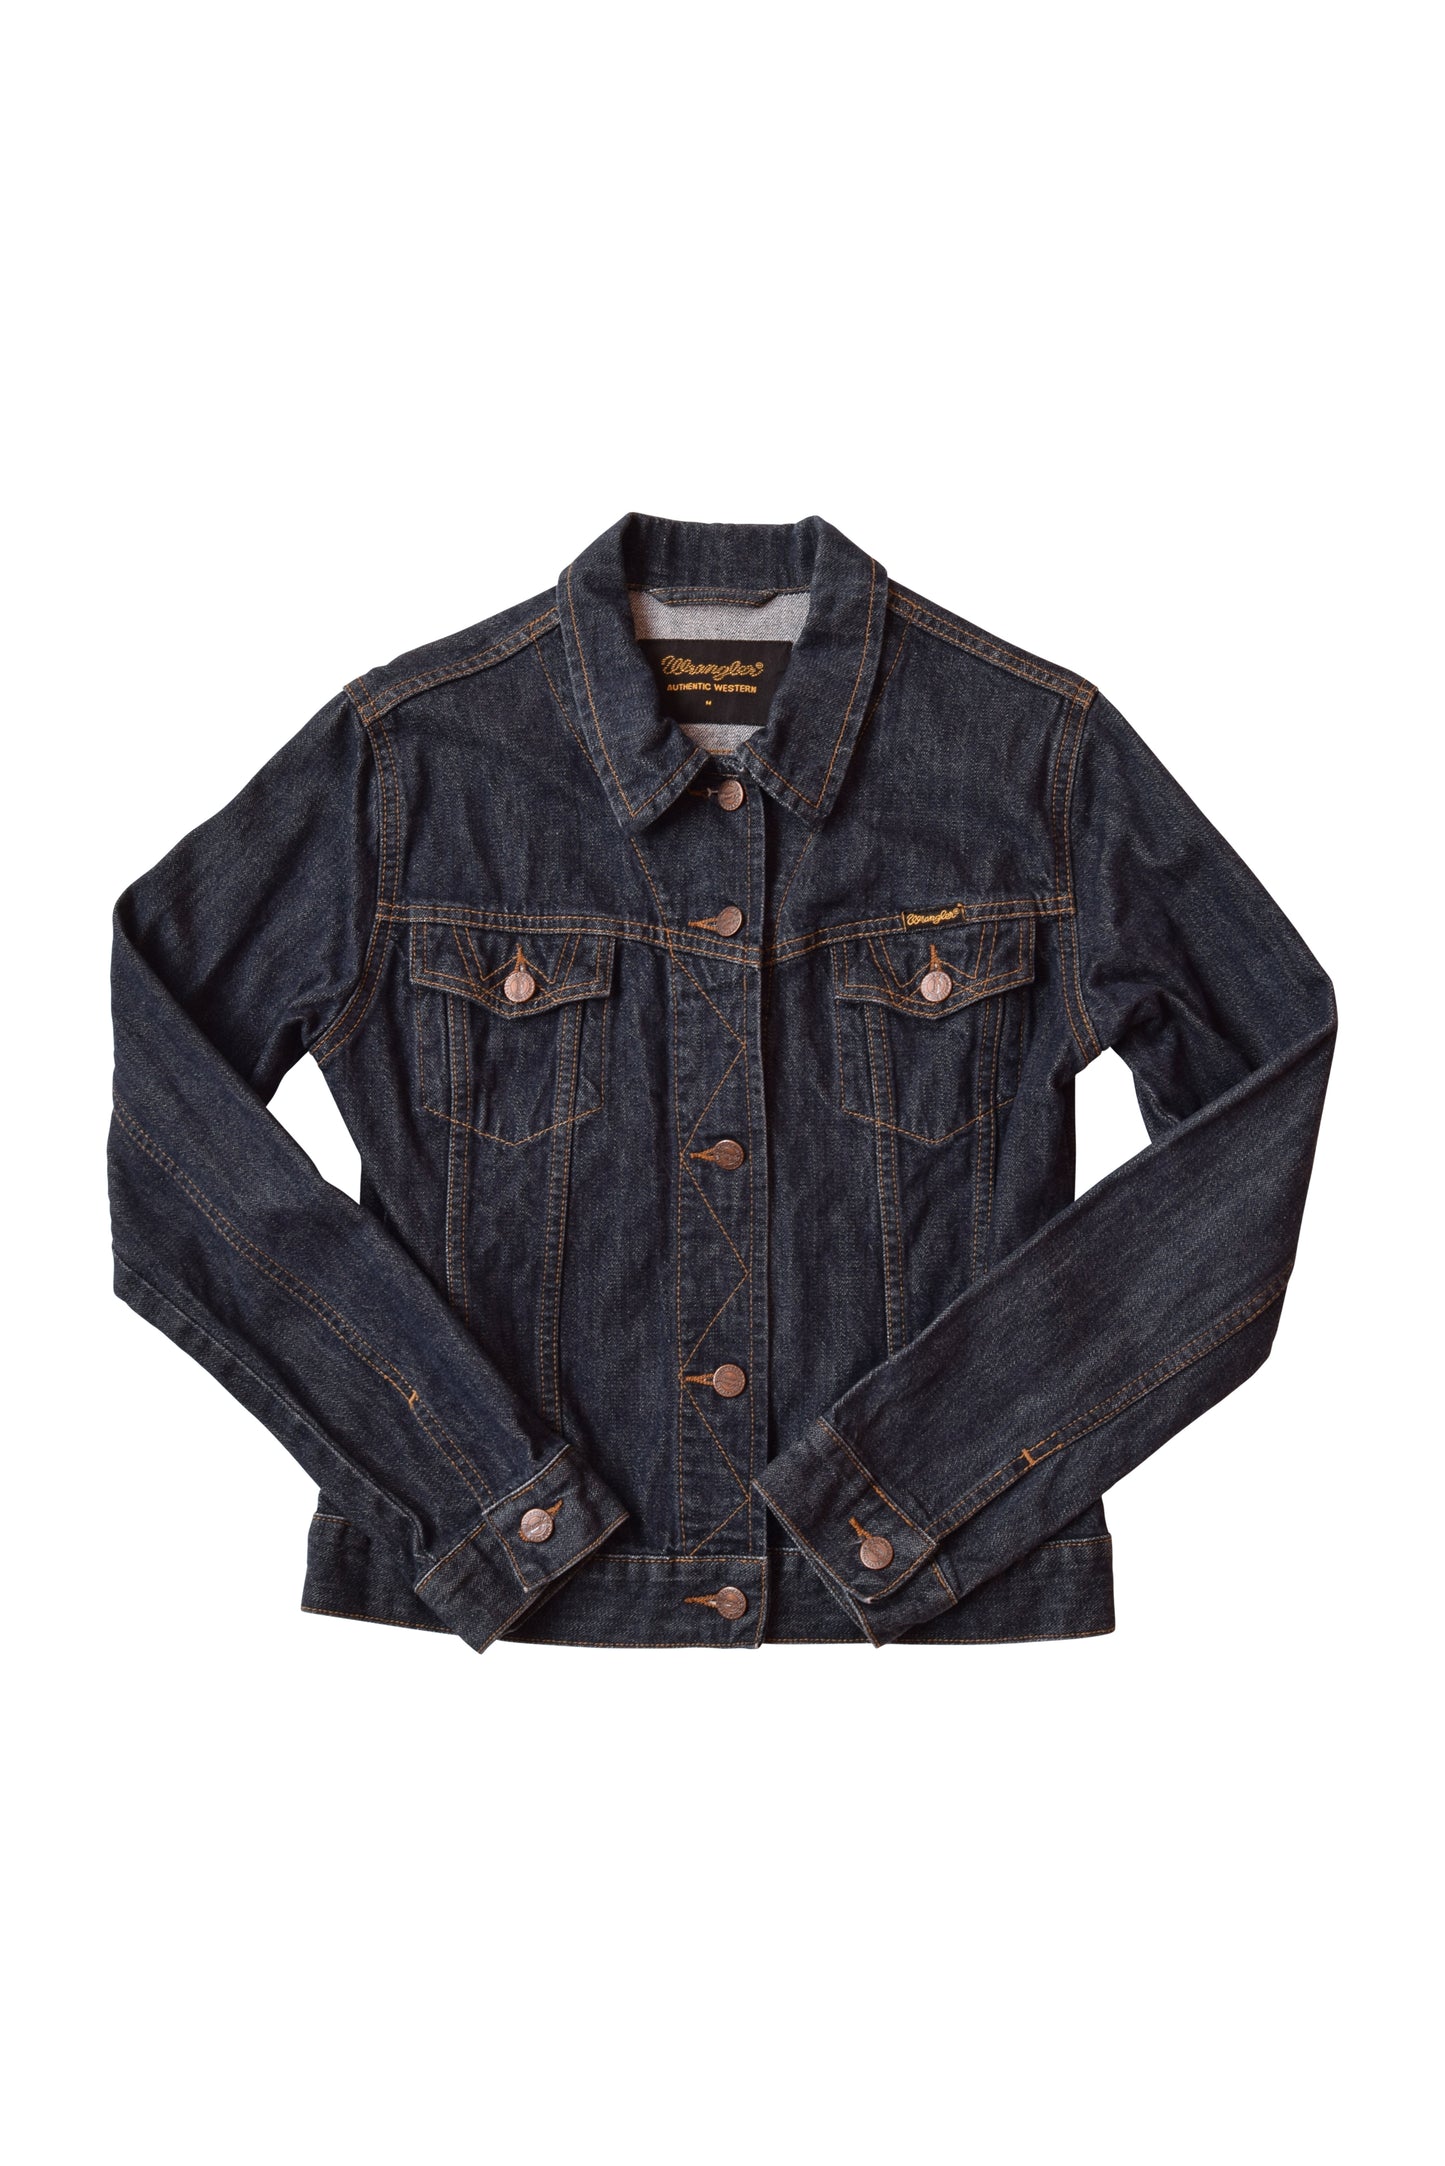 Vintage Wrangler Denim Jacket Authentic Western Size M